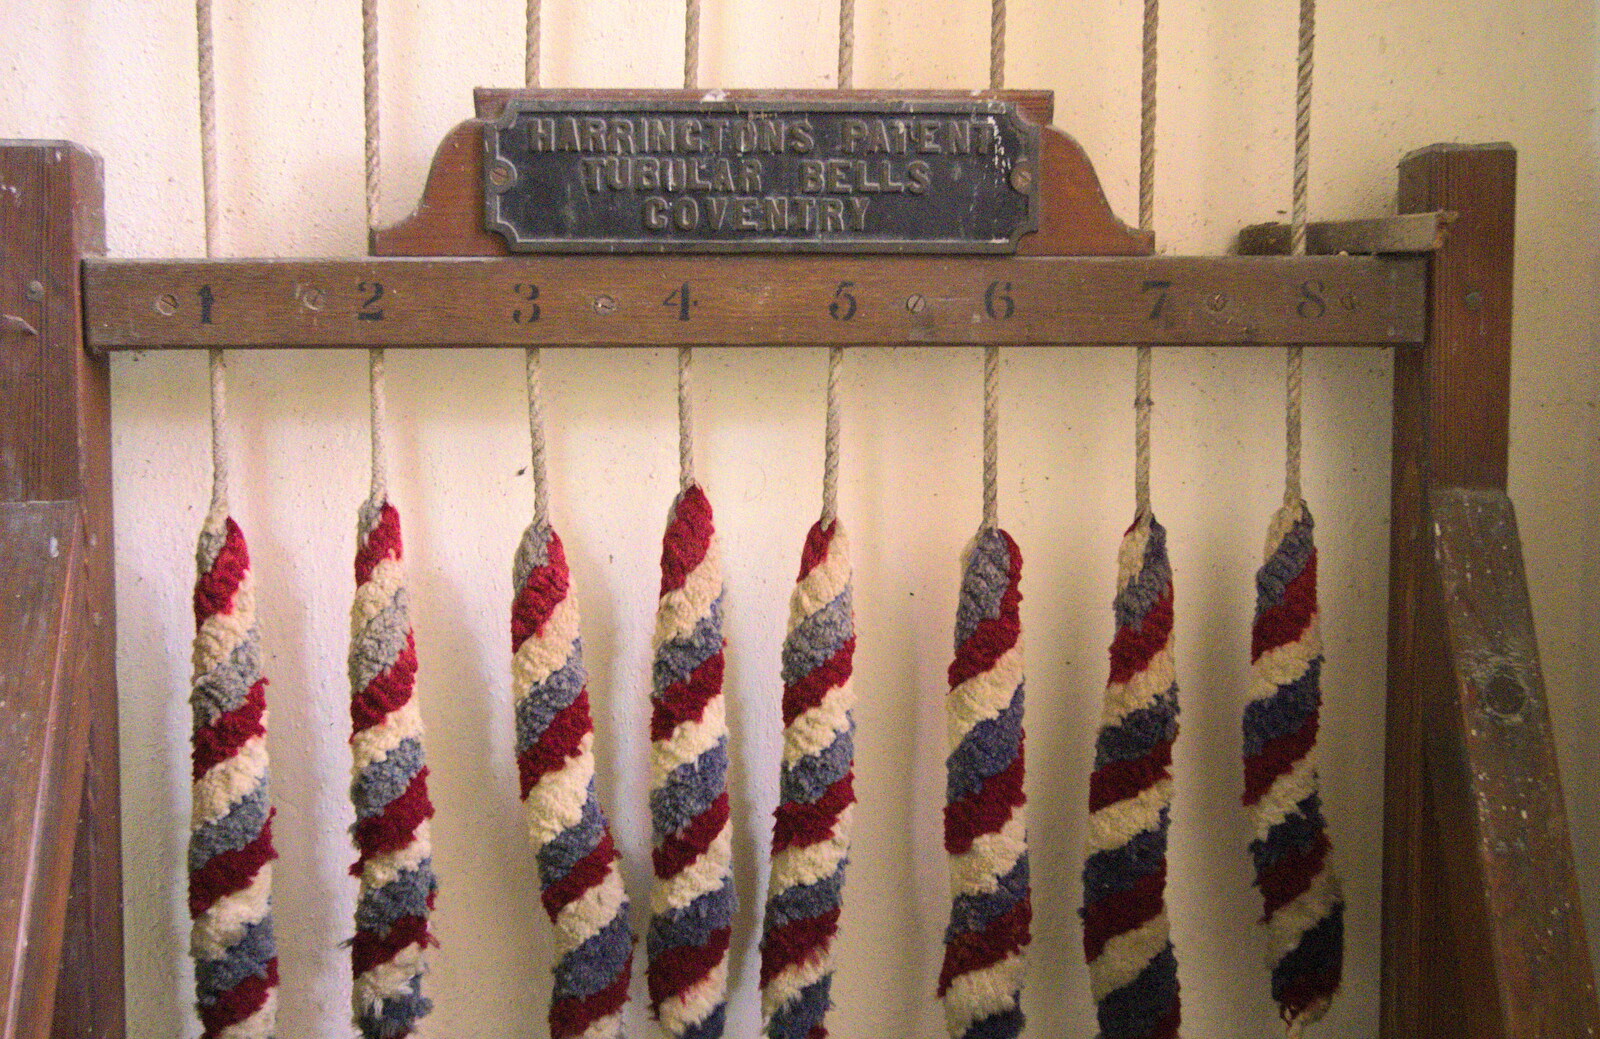 Bell ropes: Harrington's Patent Tubular Bells from Camping at Dower House, West Harling, Norfolk - 1st September 2012